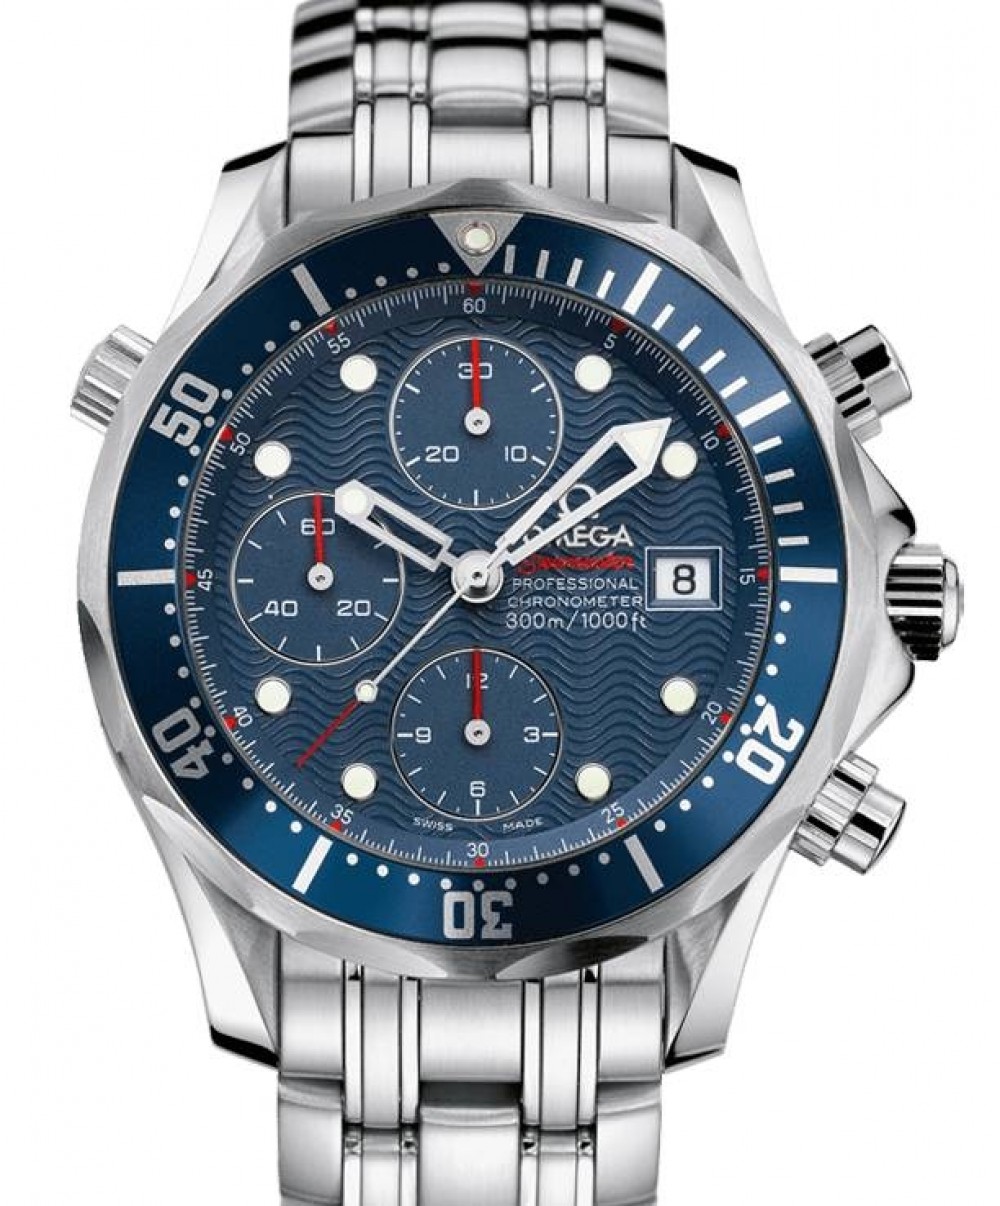 omega-seamaster-diver-300m-co-axial-chronograph-stainless-steel-blue-41-5mm-dial-bezel-bracelet-2225-80-00.jpg